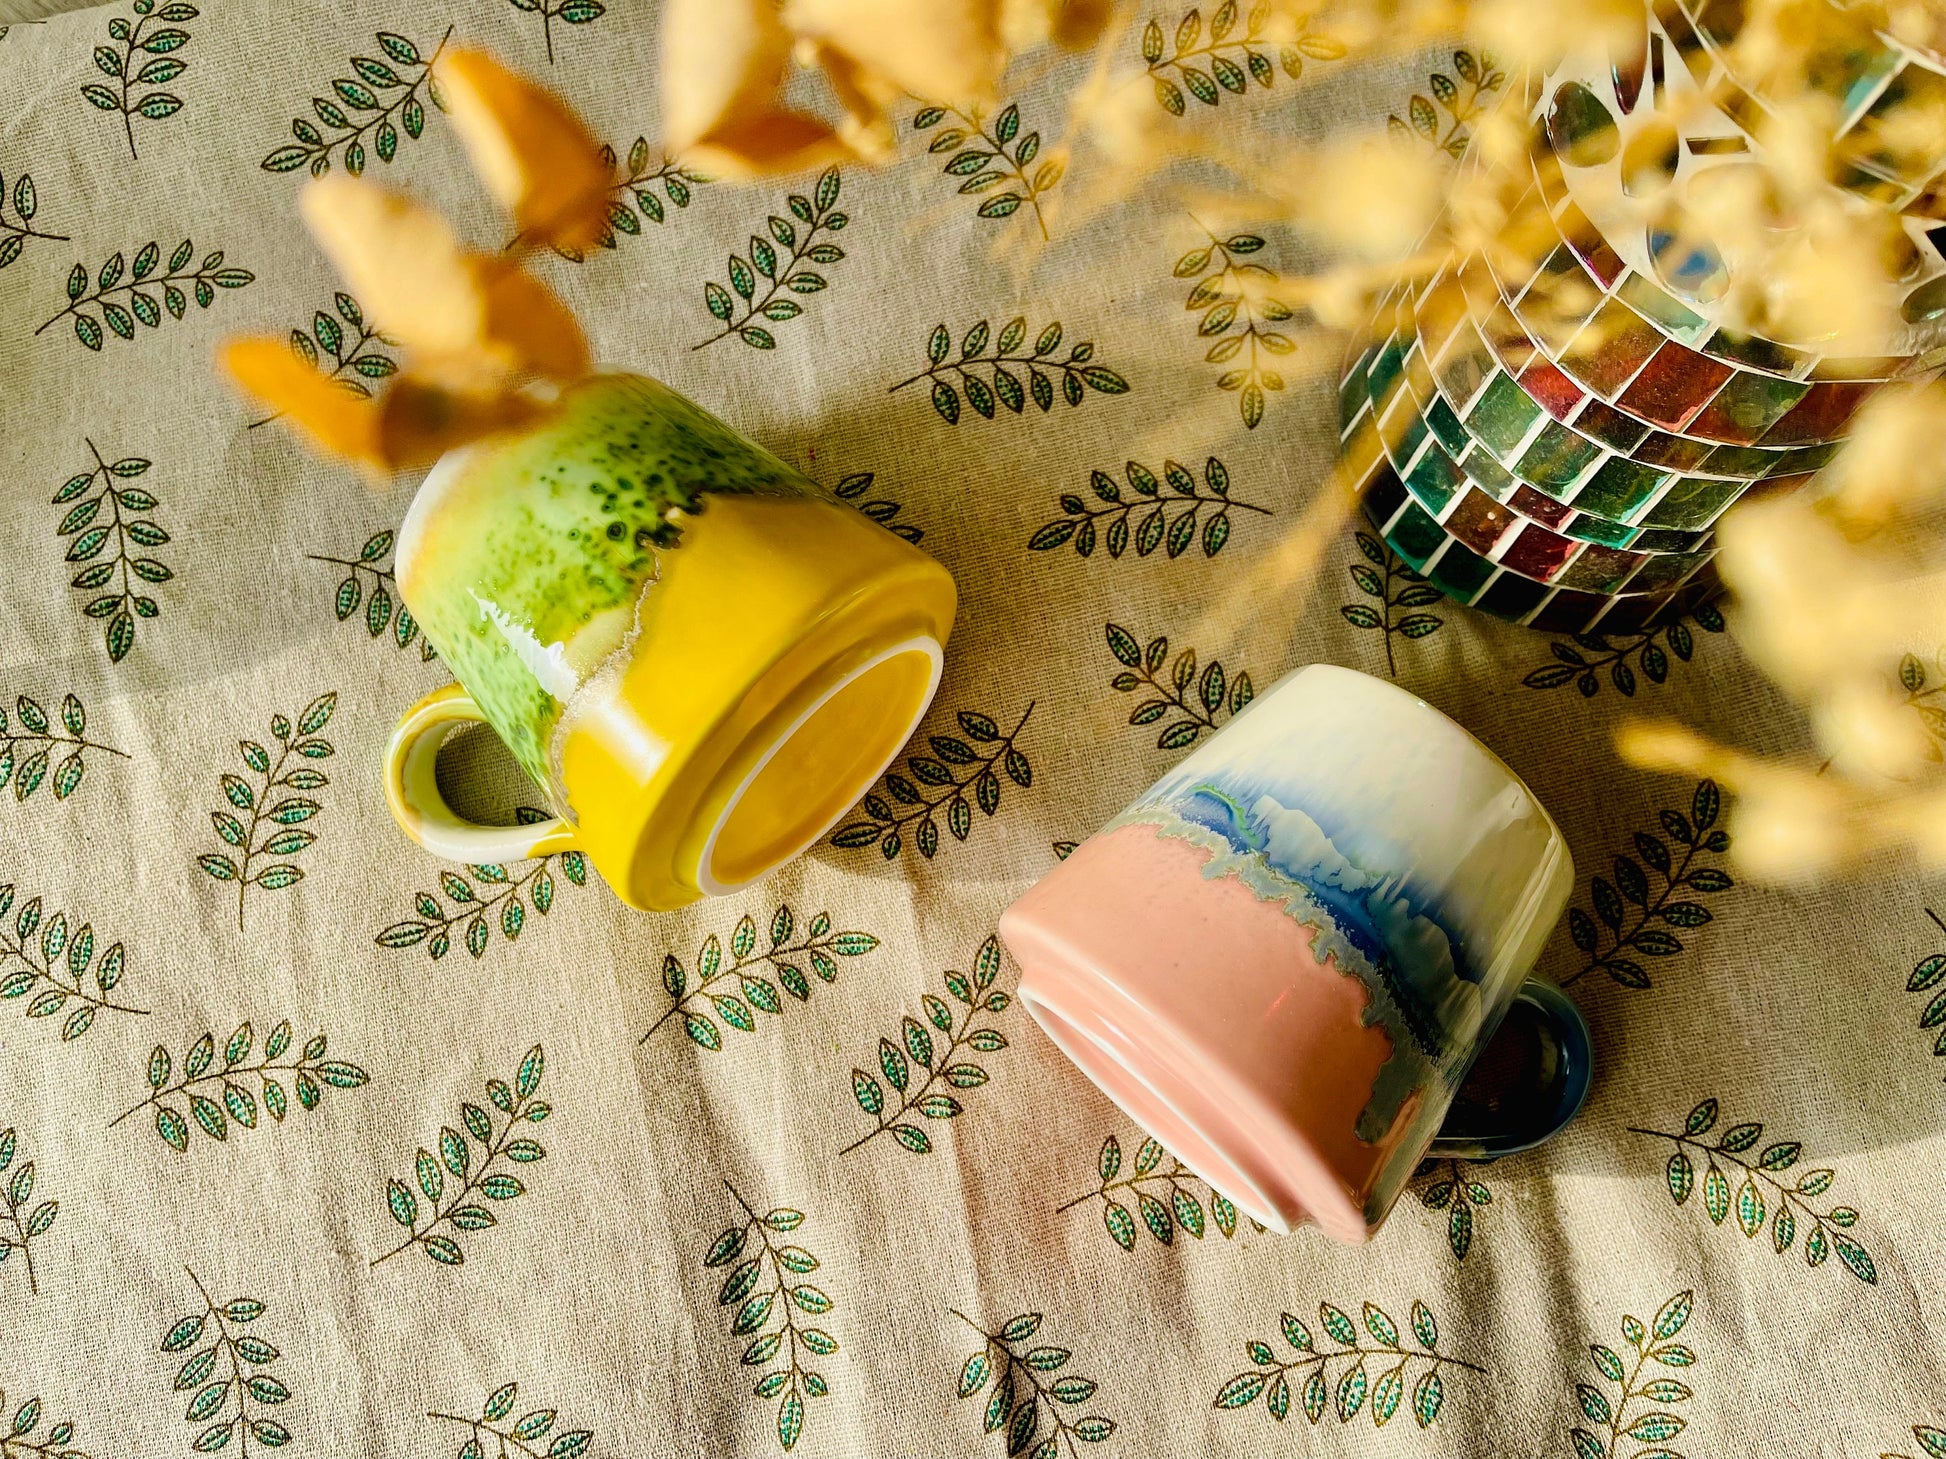 Retro Handmade Ceramic Mugs, Personalized Ceramic Cup for Coffee Lovers